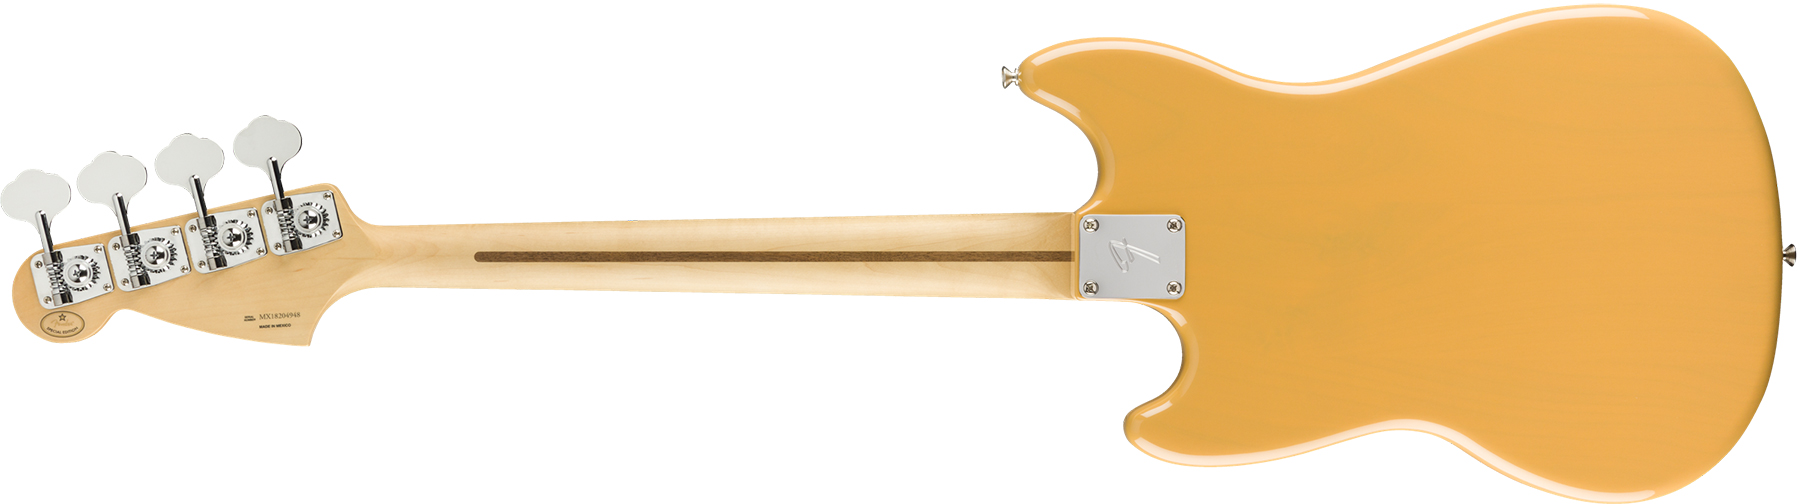 Fender Mustang Bass Pj Player Ltd Mex Mn - Butterscotch Blonde - Bajo eléctrico para niños - Variation 1